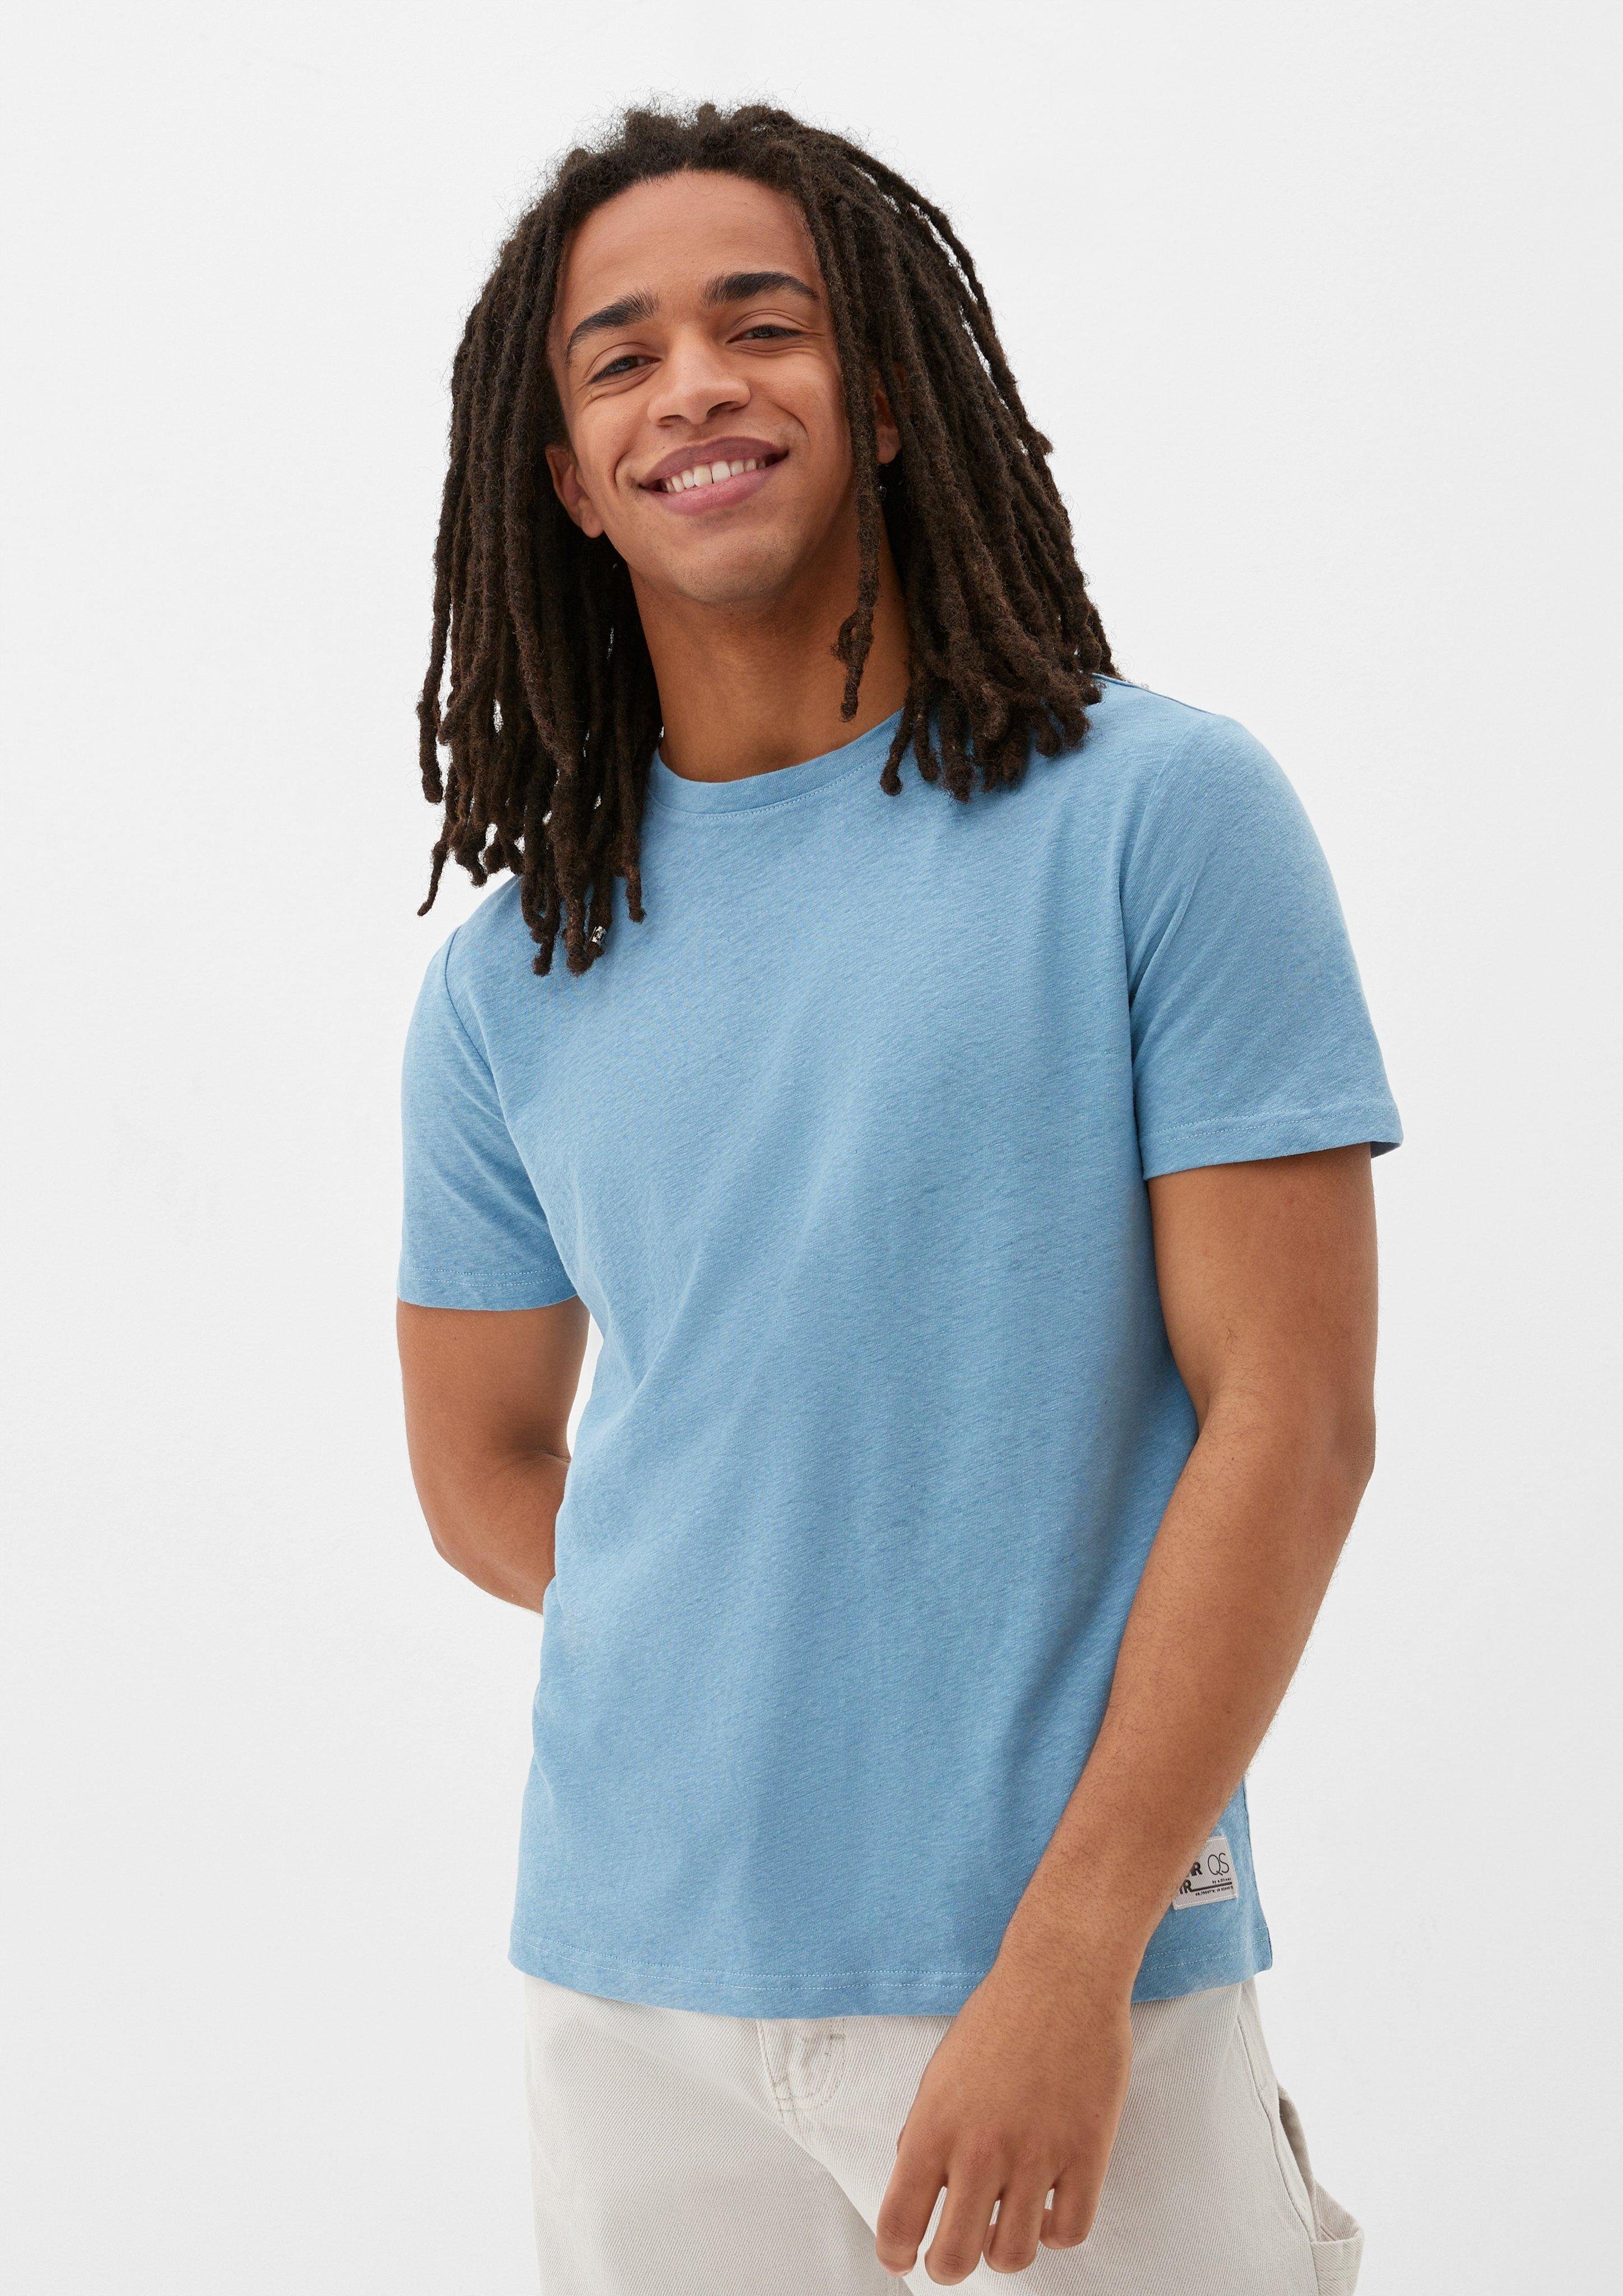 QS Kurzarmshirt T-Shirt aus hellblau Leinenmix Label-Patch